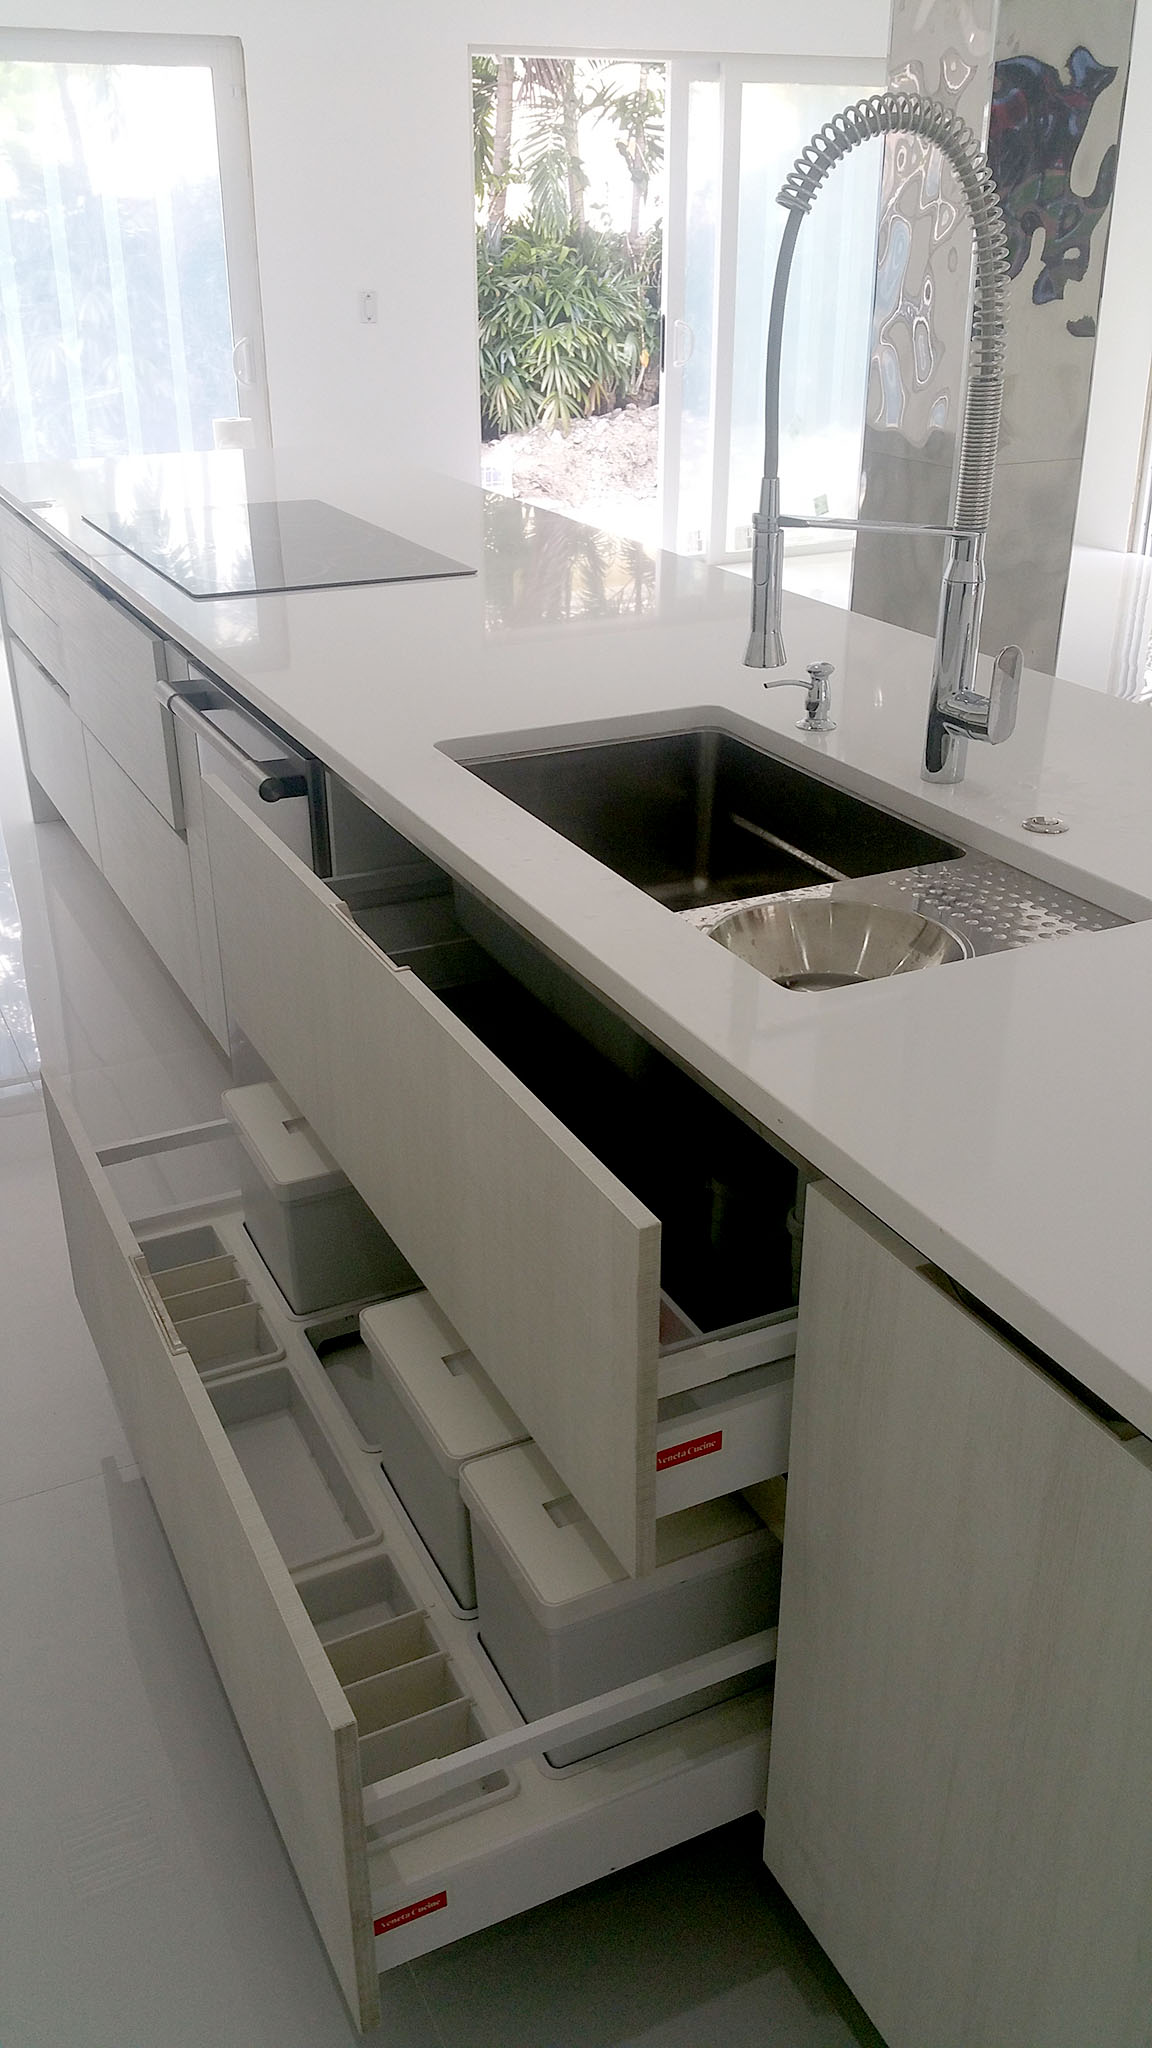 Italian kitchen design with white high-gloss kitchen cabinets